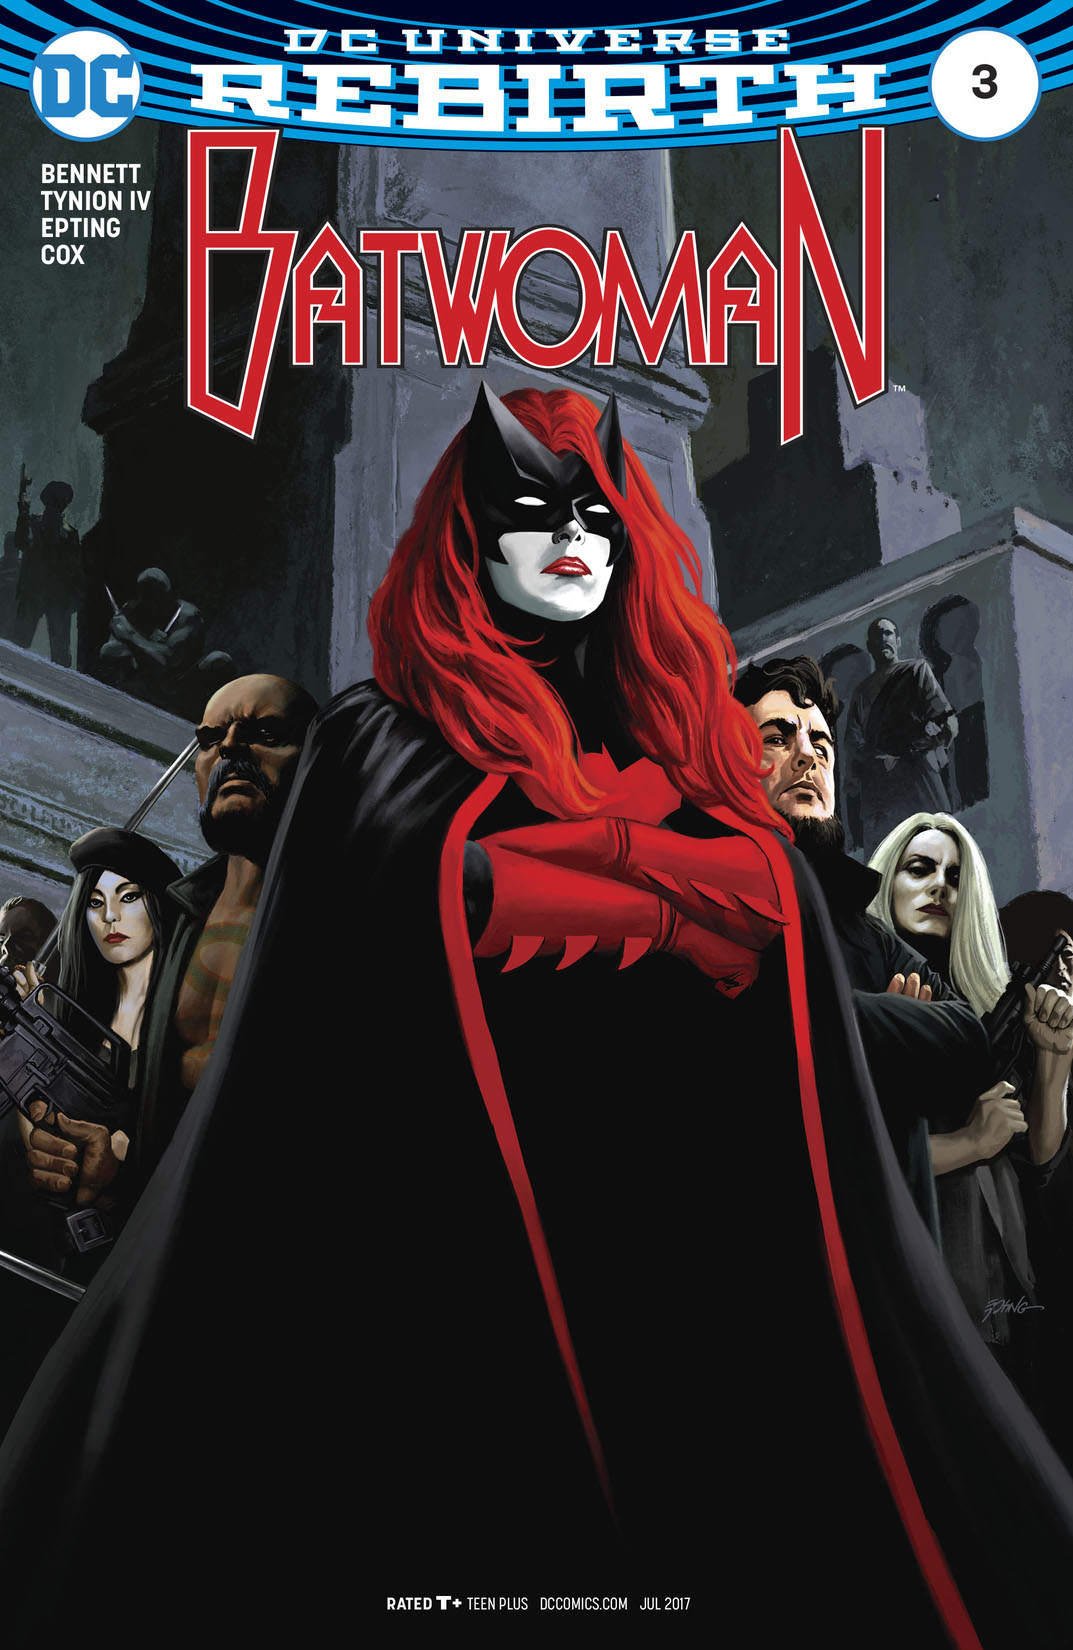 Batwoman (2017-) #3 preview images